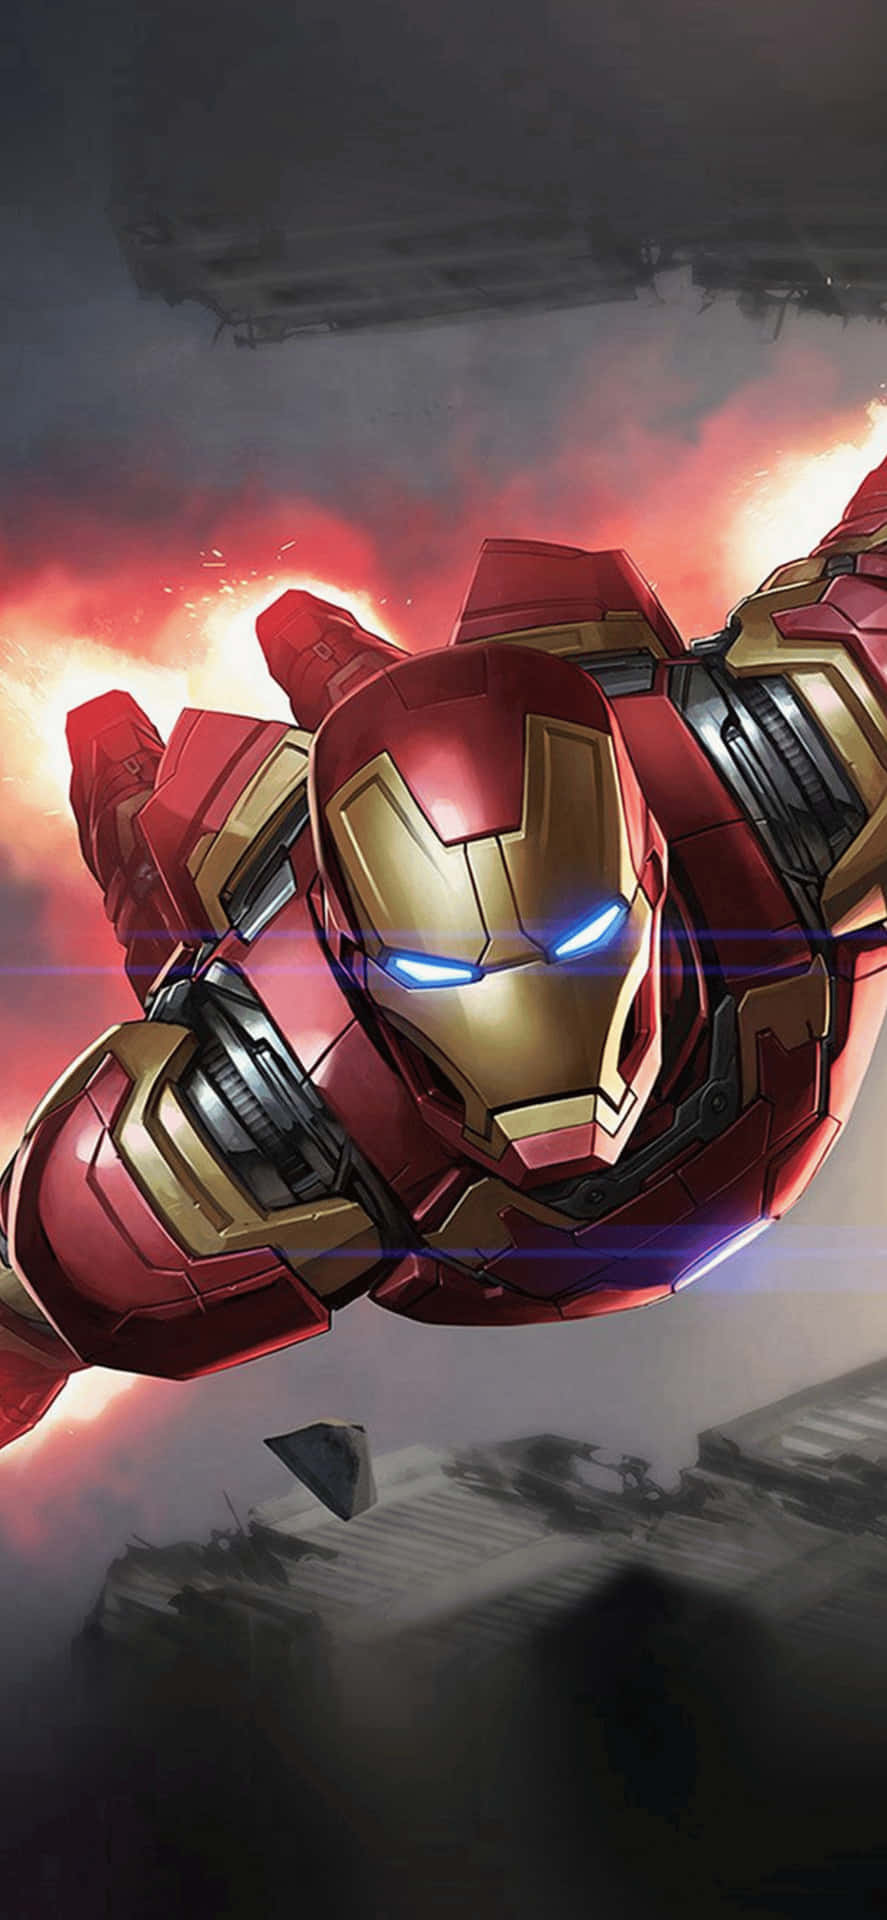 Iphonexs Max Bakgrundsbild Med Marvels Iron Man.